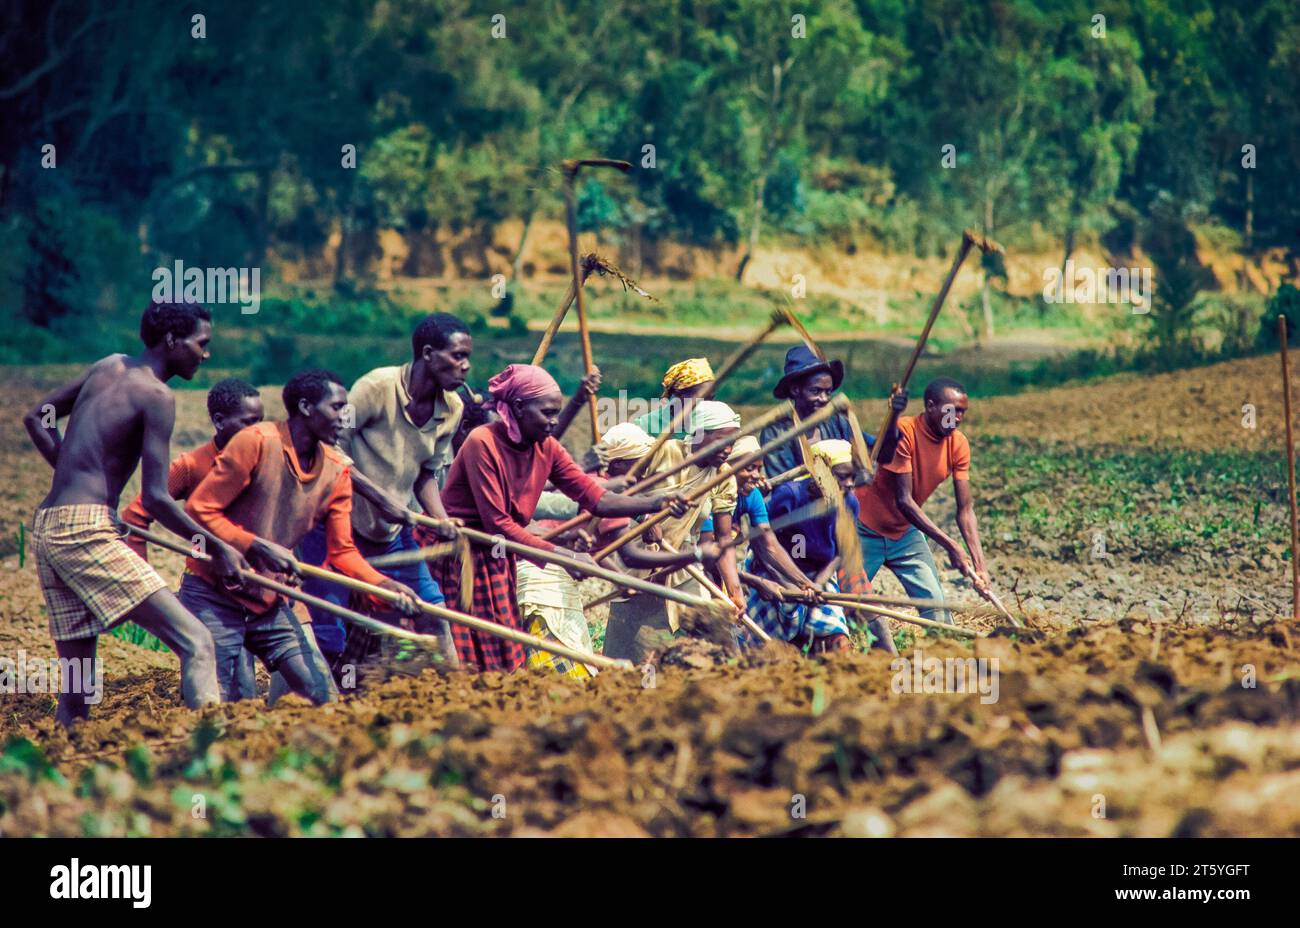 Rwanda,Kibuye; members of farmers' cooperative plow the land together Stock Photo